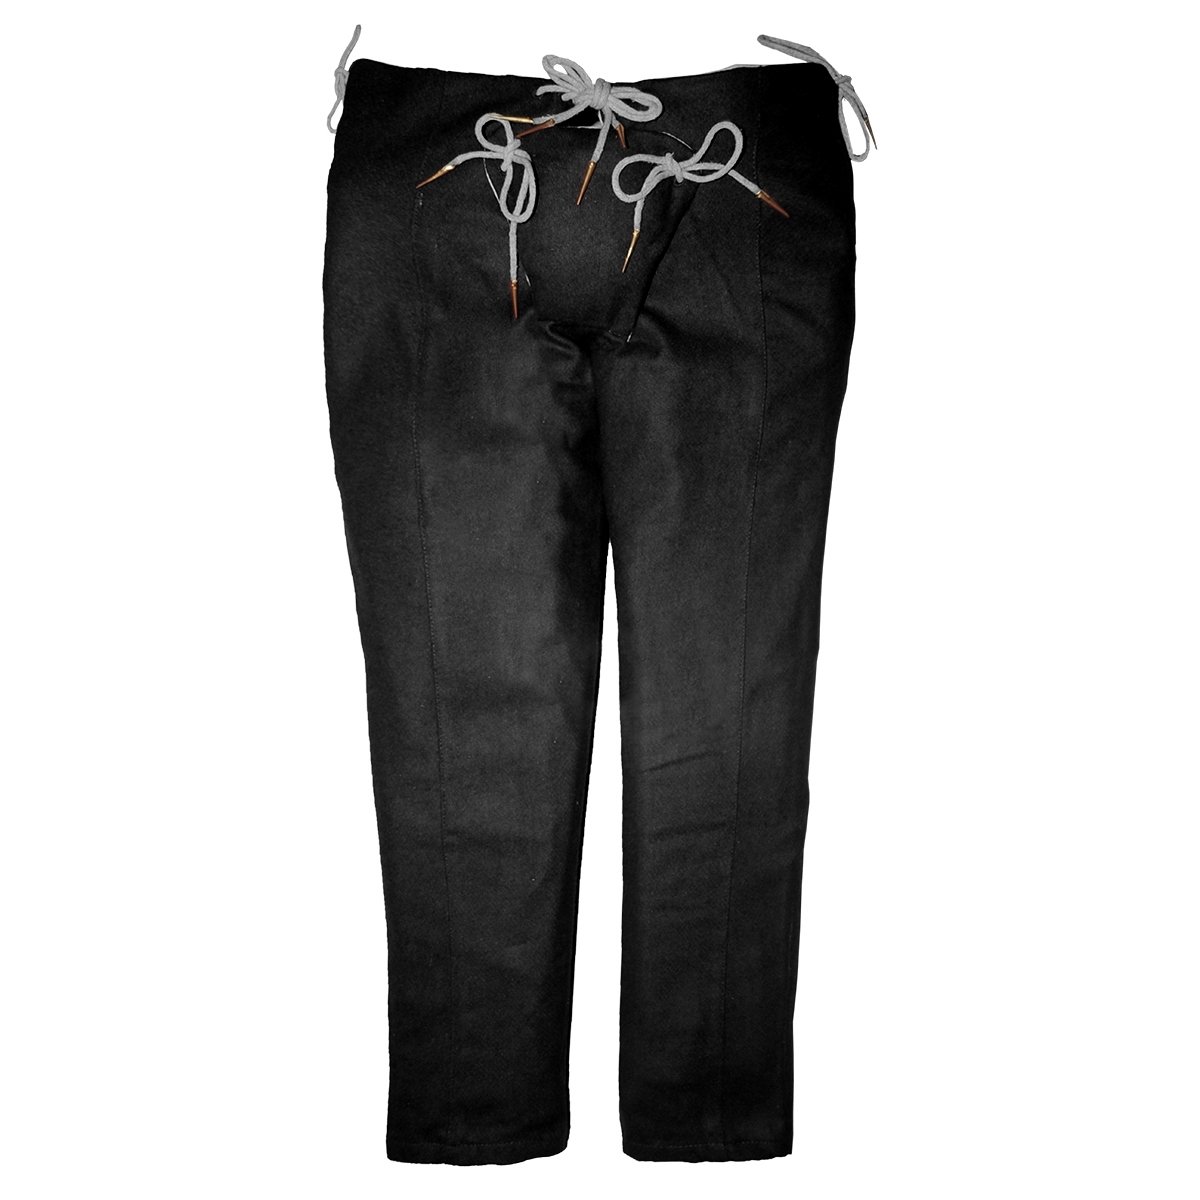 Man's 15th C. Trousers -Black, Size XL